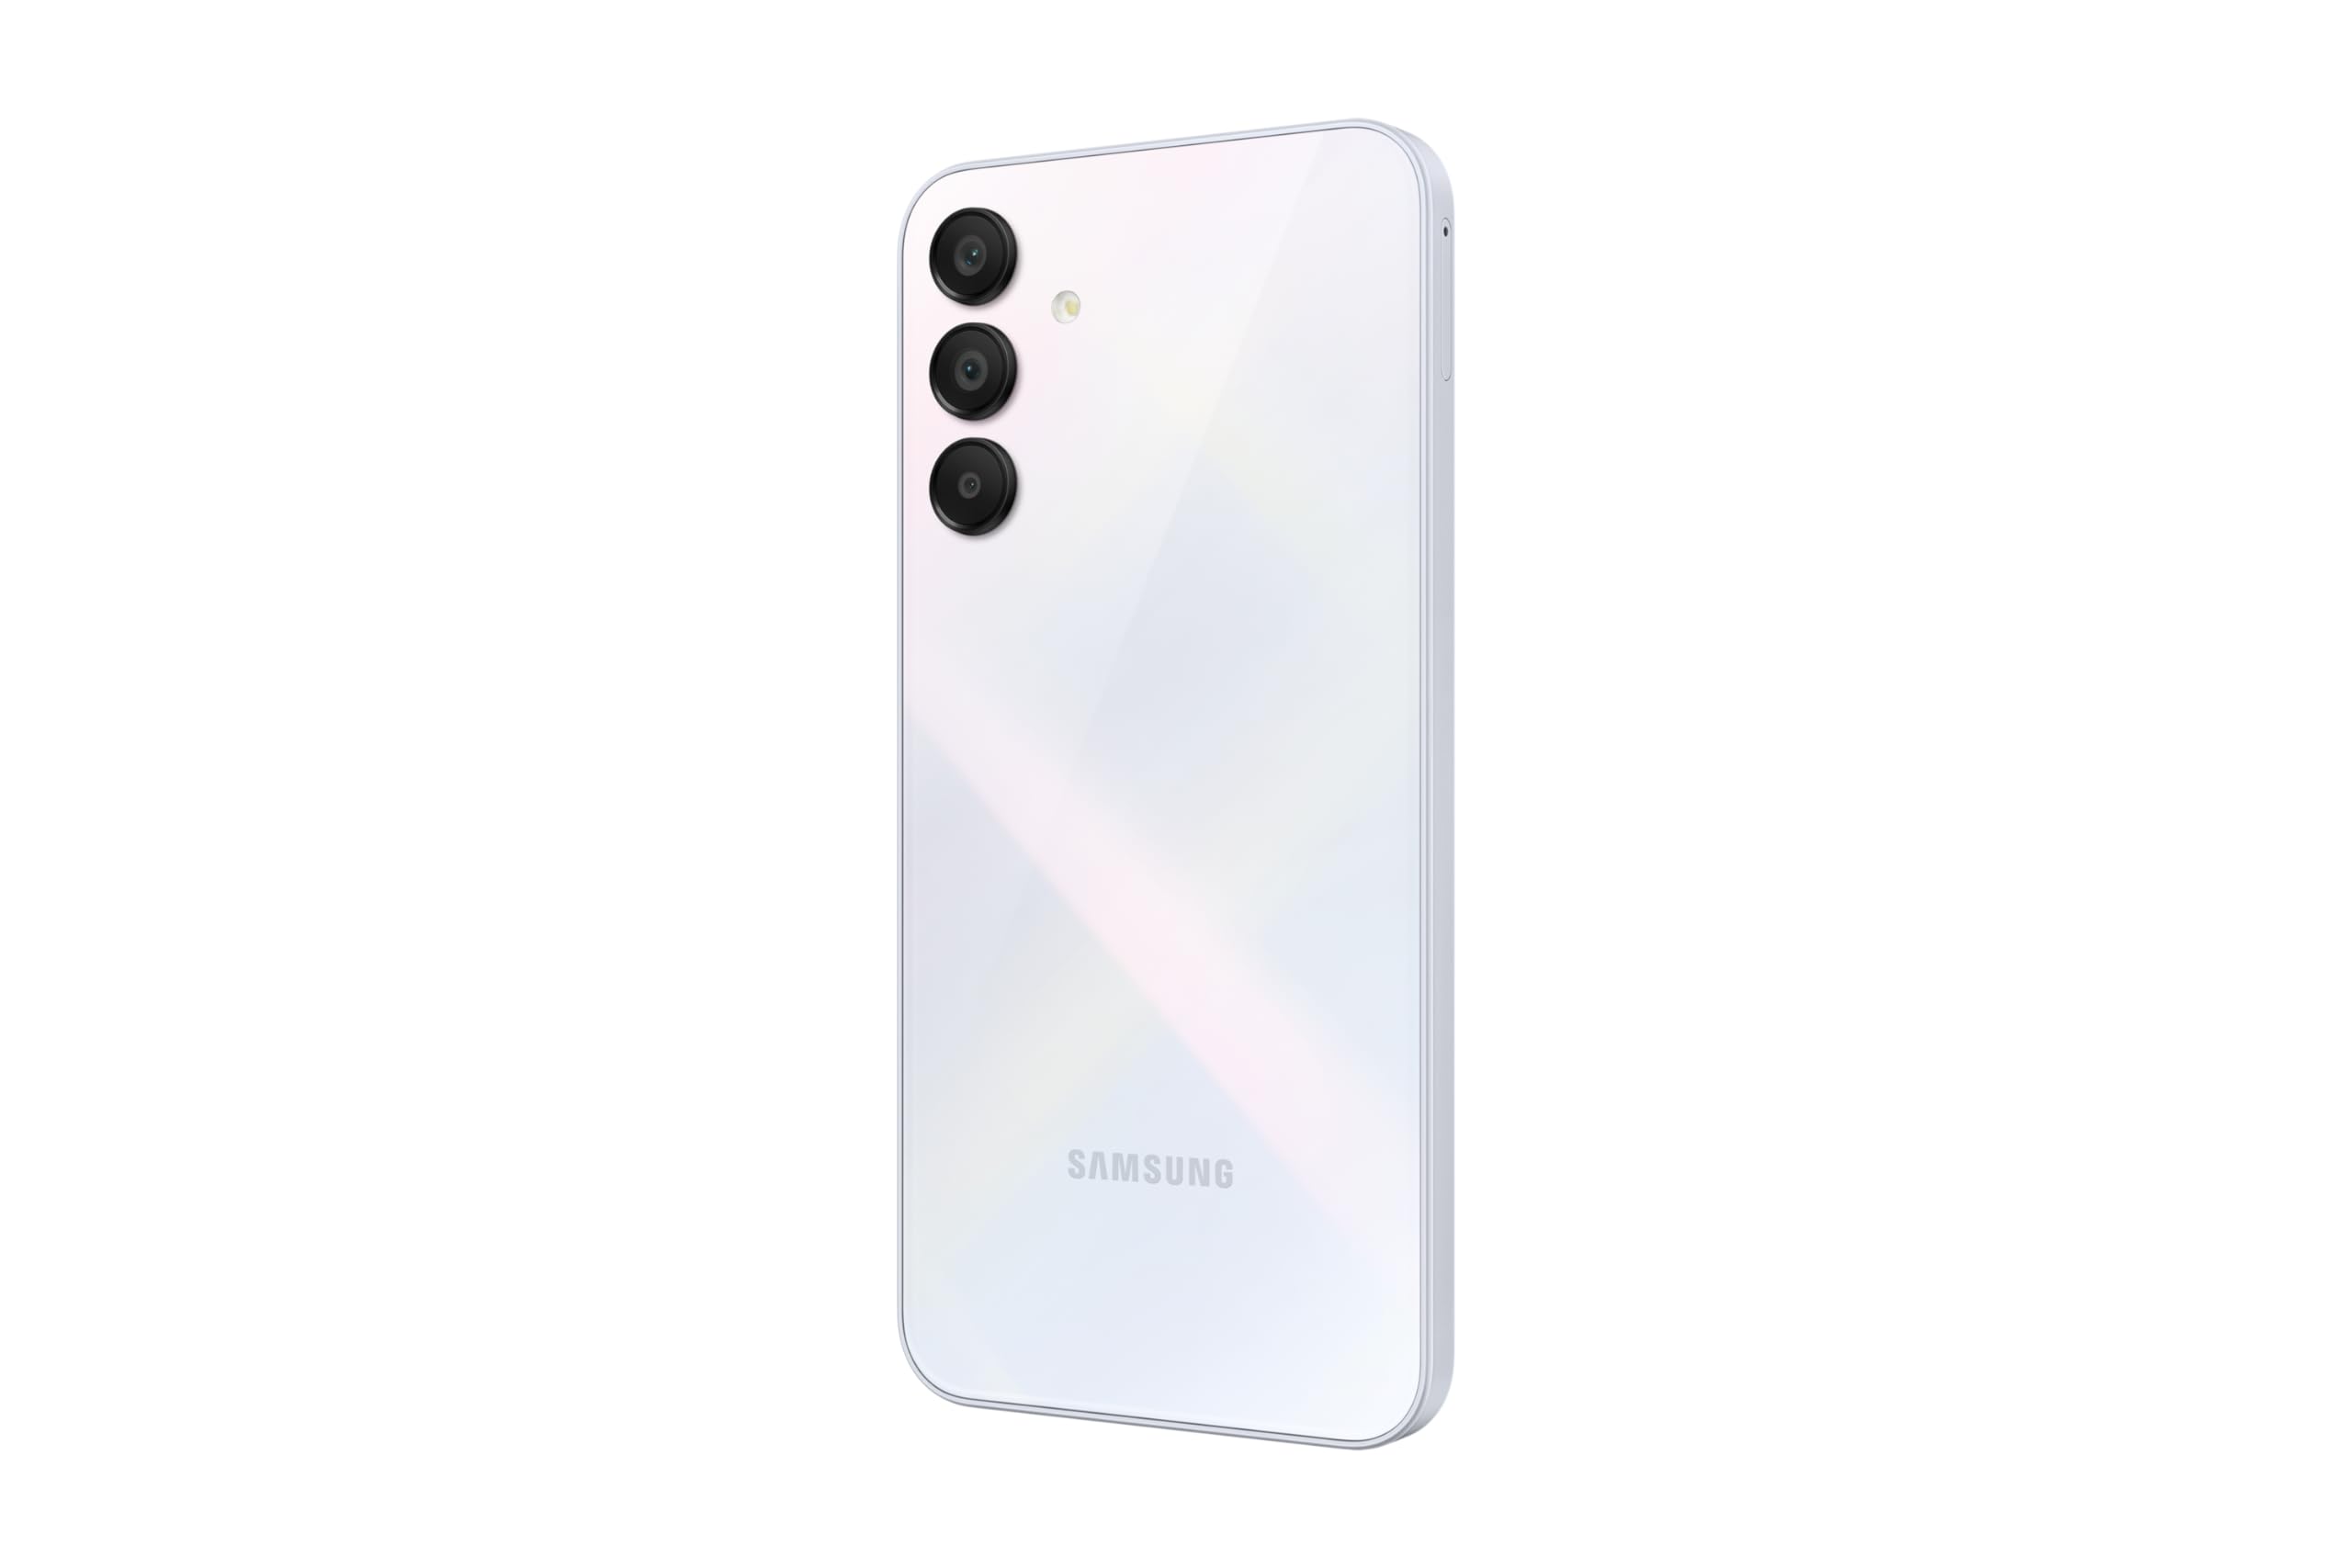 Samsung Galaxy A15 LTE, Android Smartphone, Dual SIM Mobile Phone, 6GB RAM, 128GB Storage, Blue Black (UAE Version)